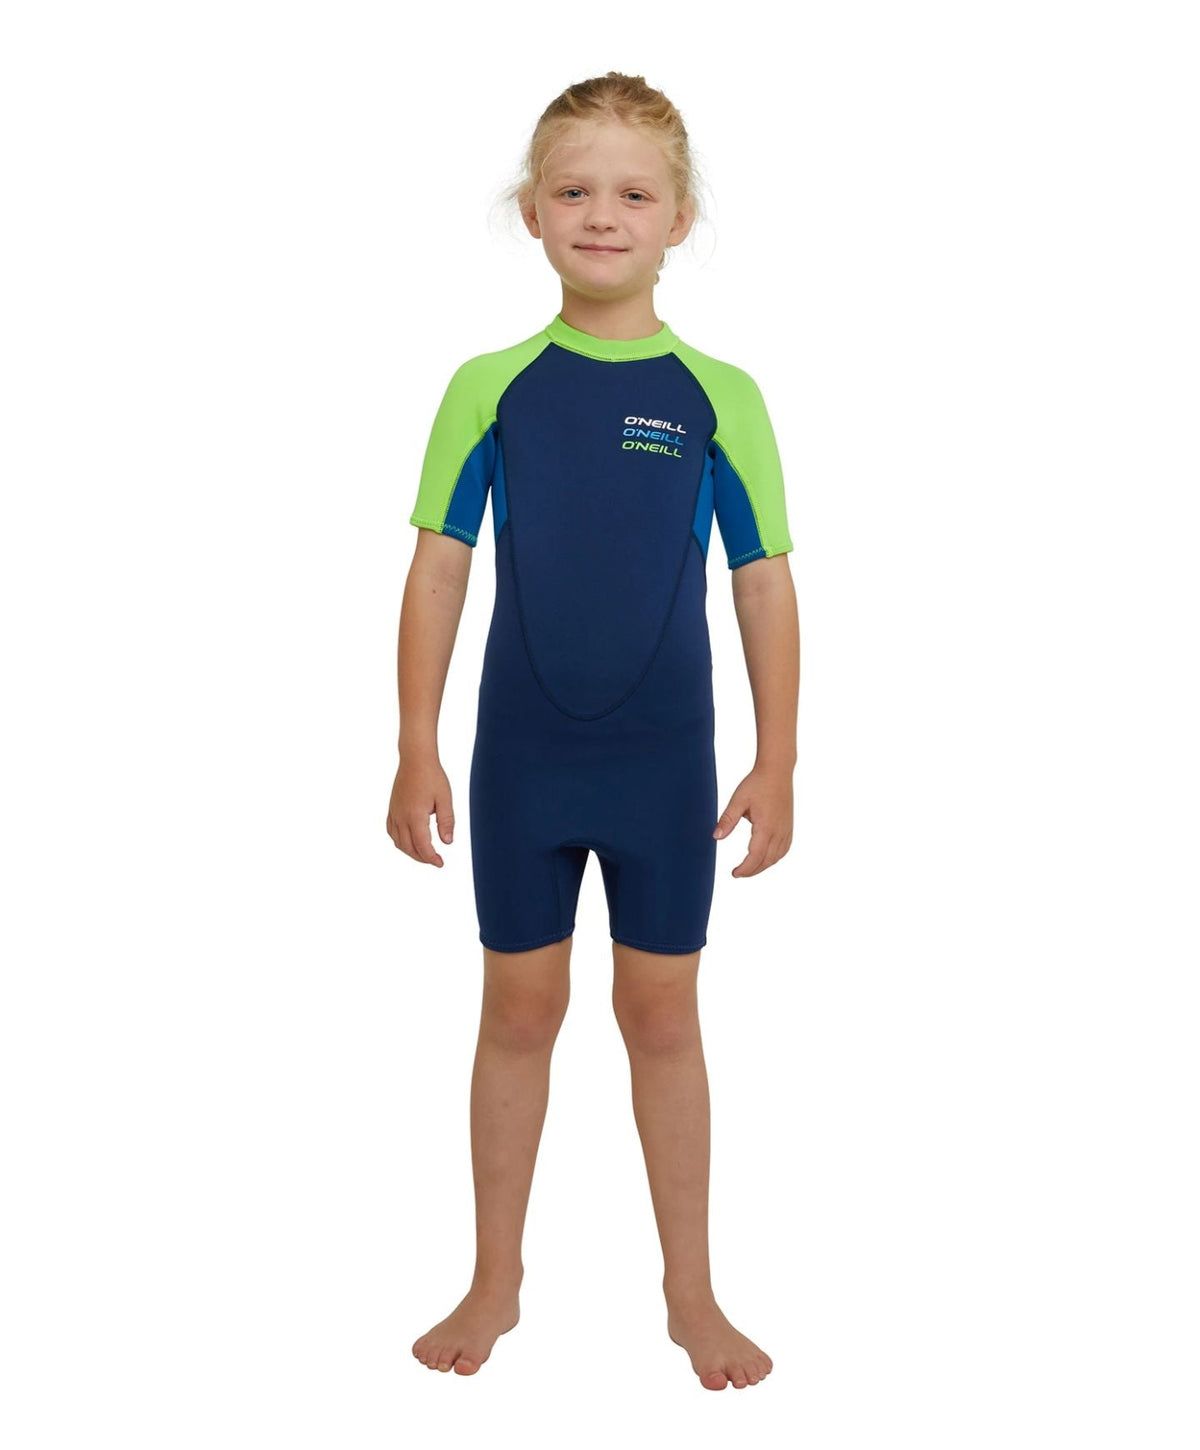 Toddler's Reactor Spring Suit 2mm Wetsuit - Marine